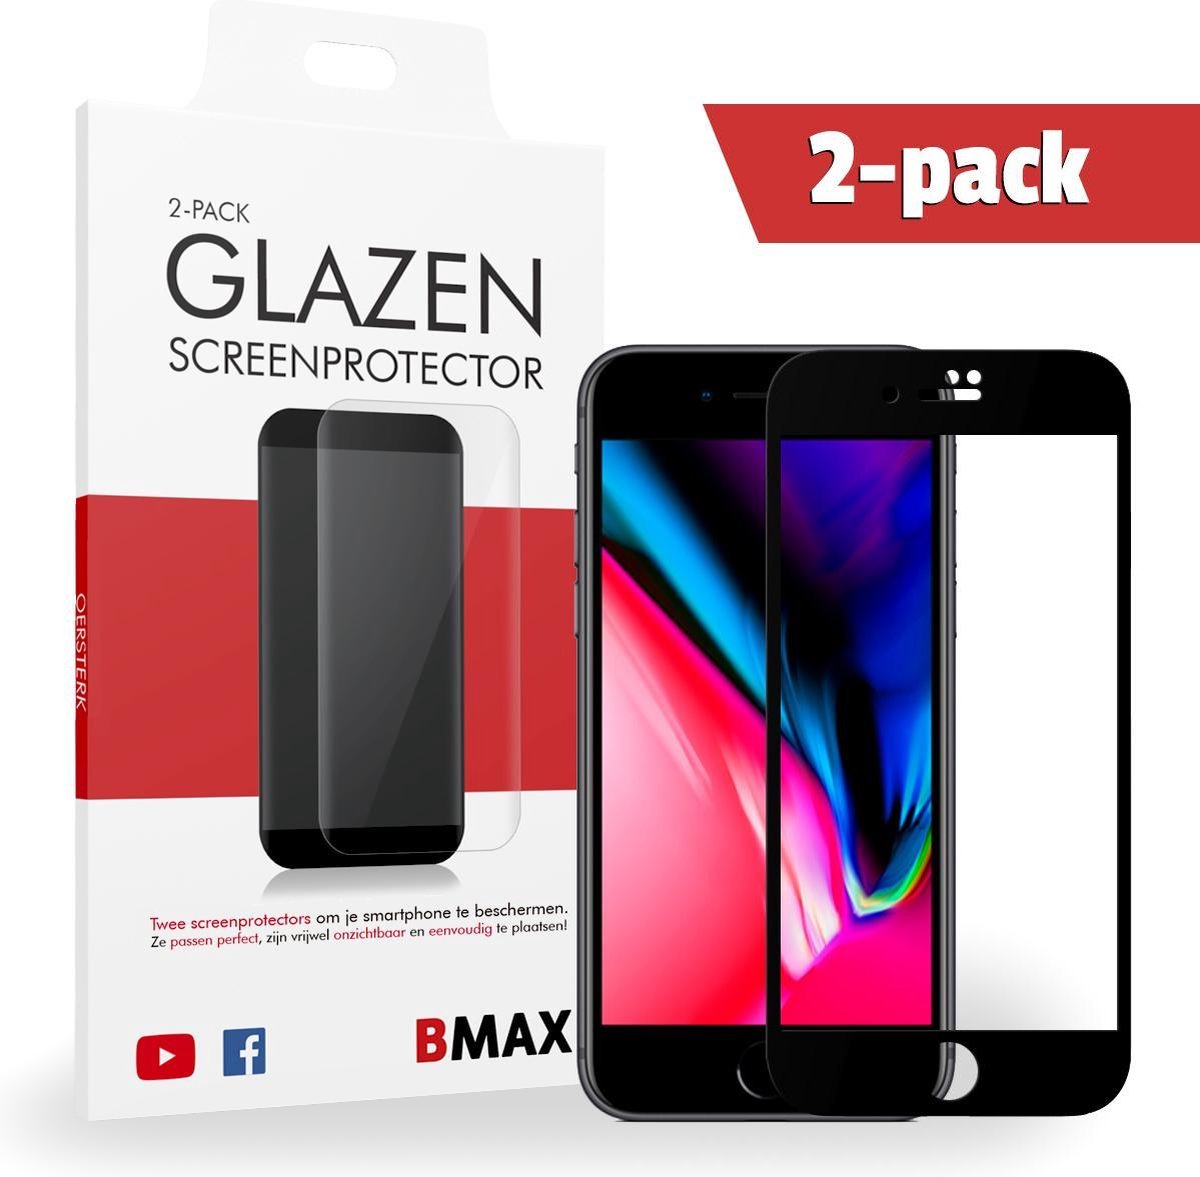 2-pack Bmax Apple Iphone 8 Screenprotector - Glass - Full Cover 5d - Black